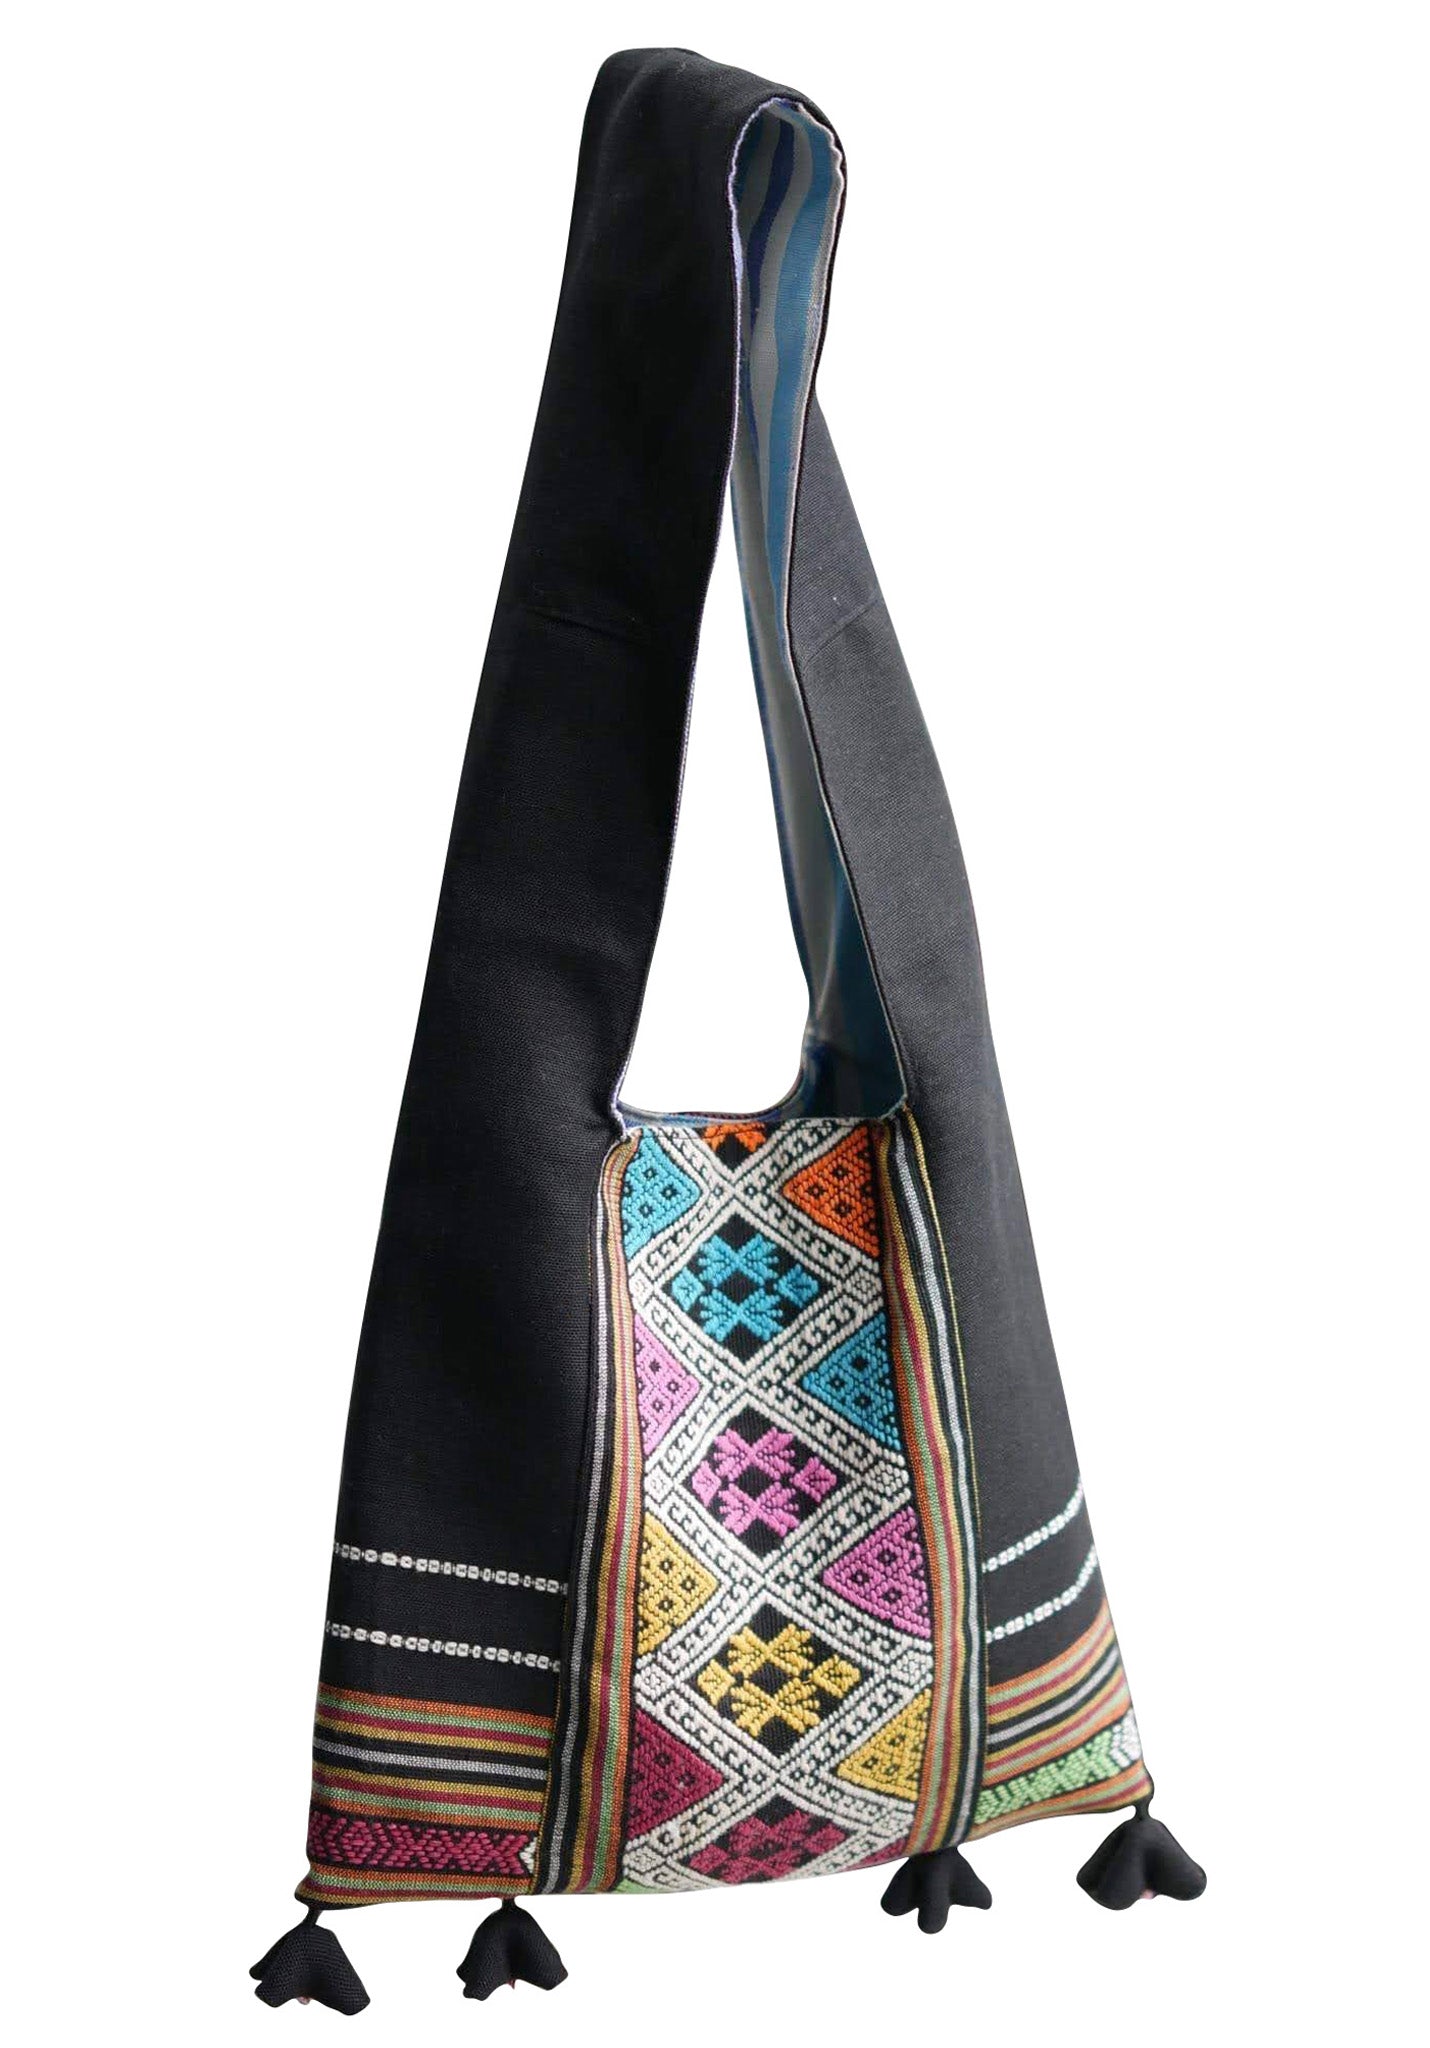 Handwoven Hand-dyed Handmade ETHNICS MINI shoulder bag tote bag Sunne Tropical - BLACK